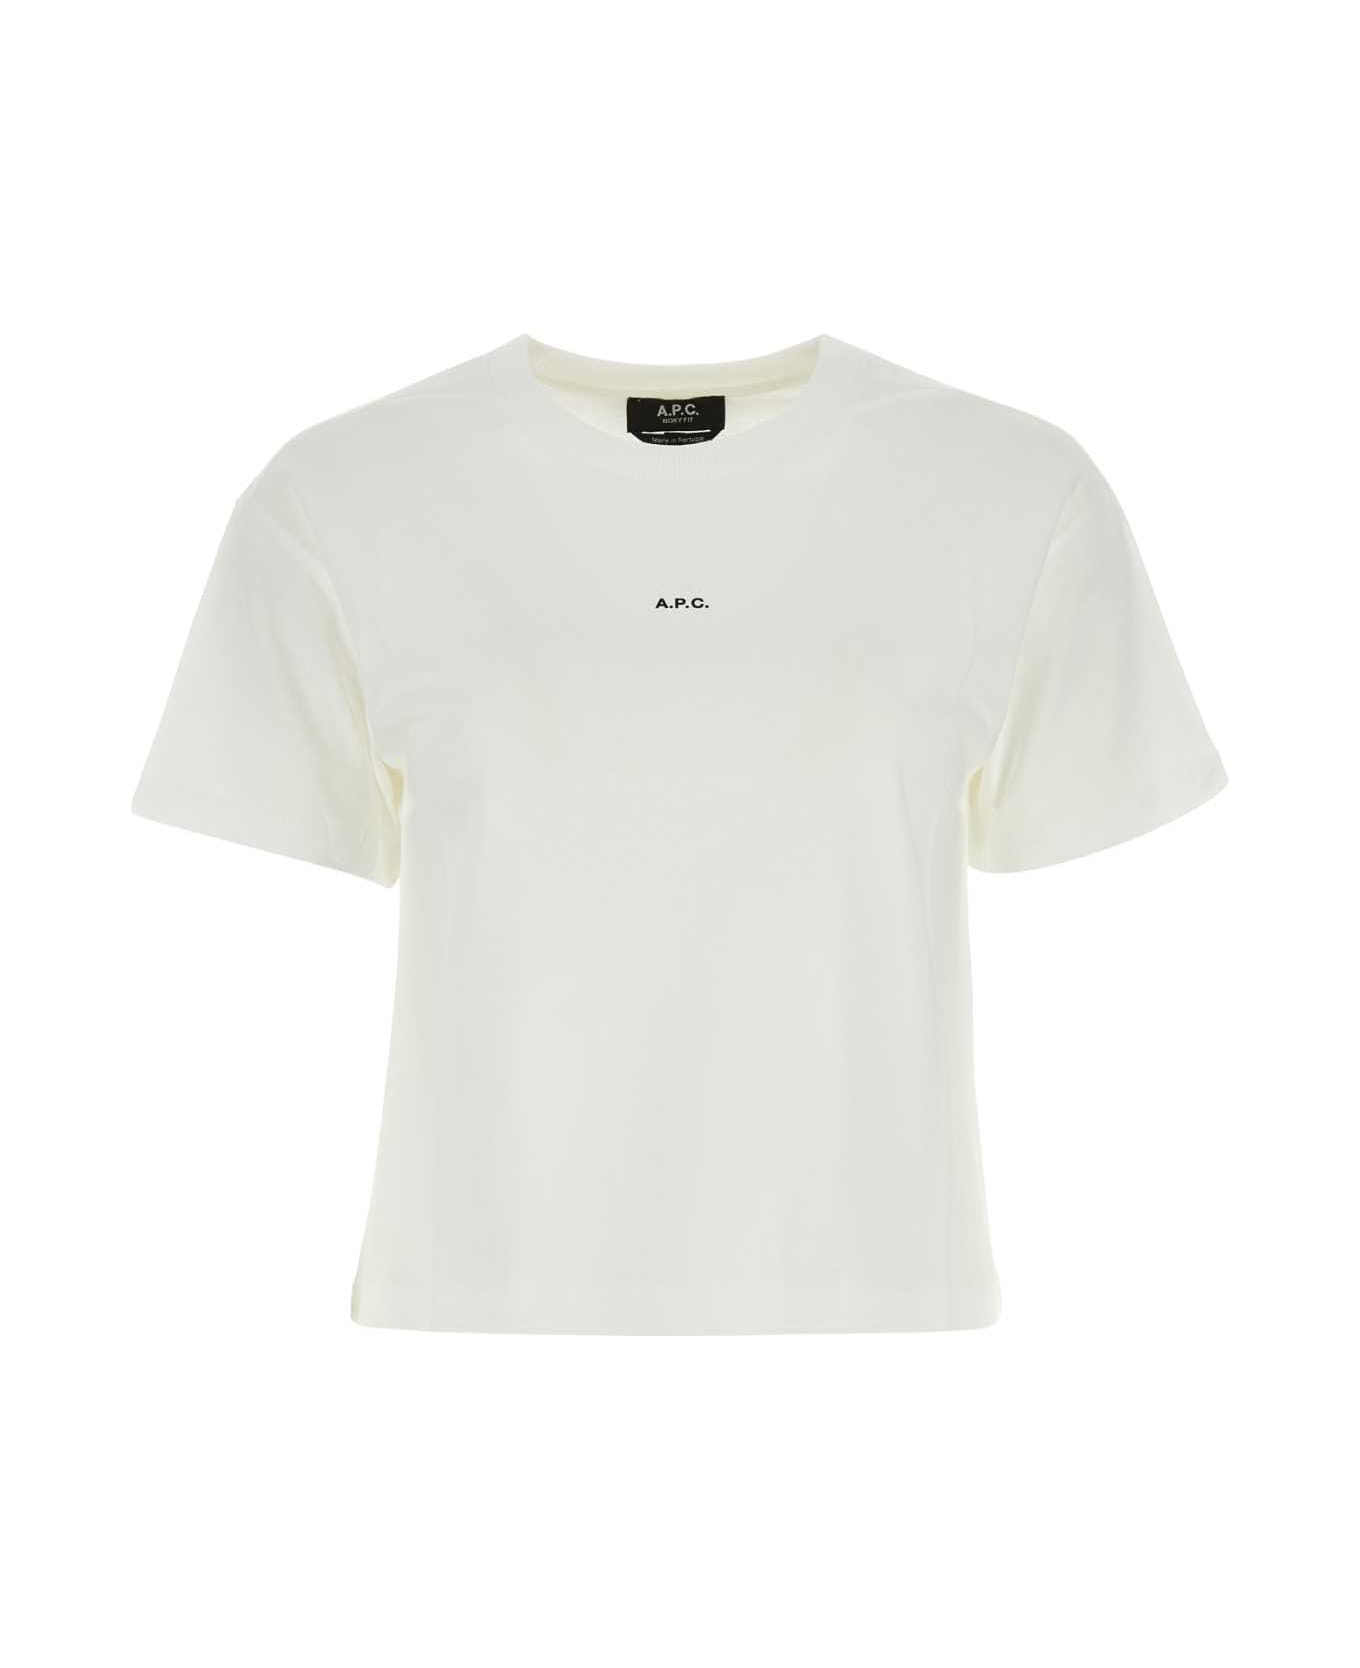 A.P.C. White Cotton T-shirt - BLANCNOIR